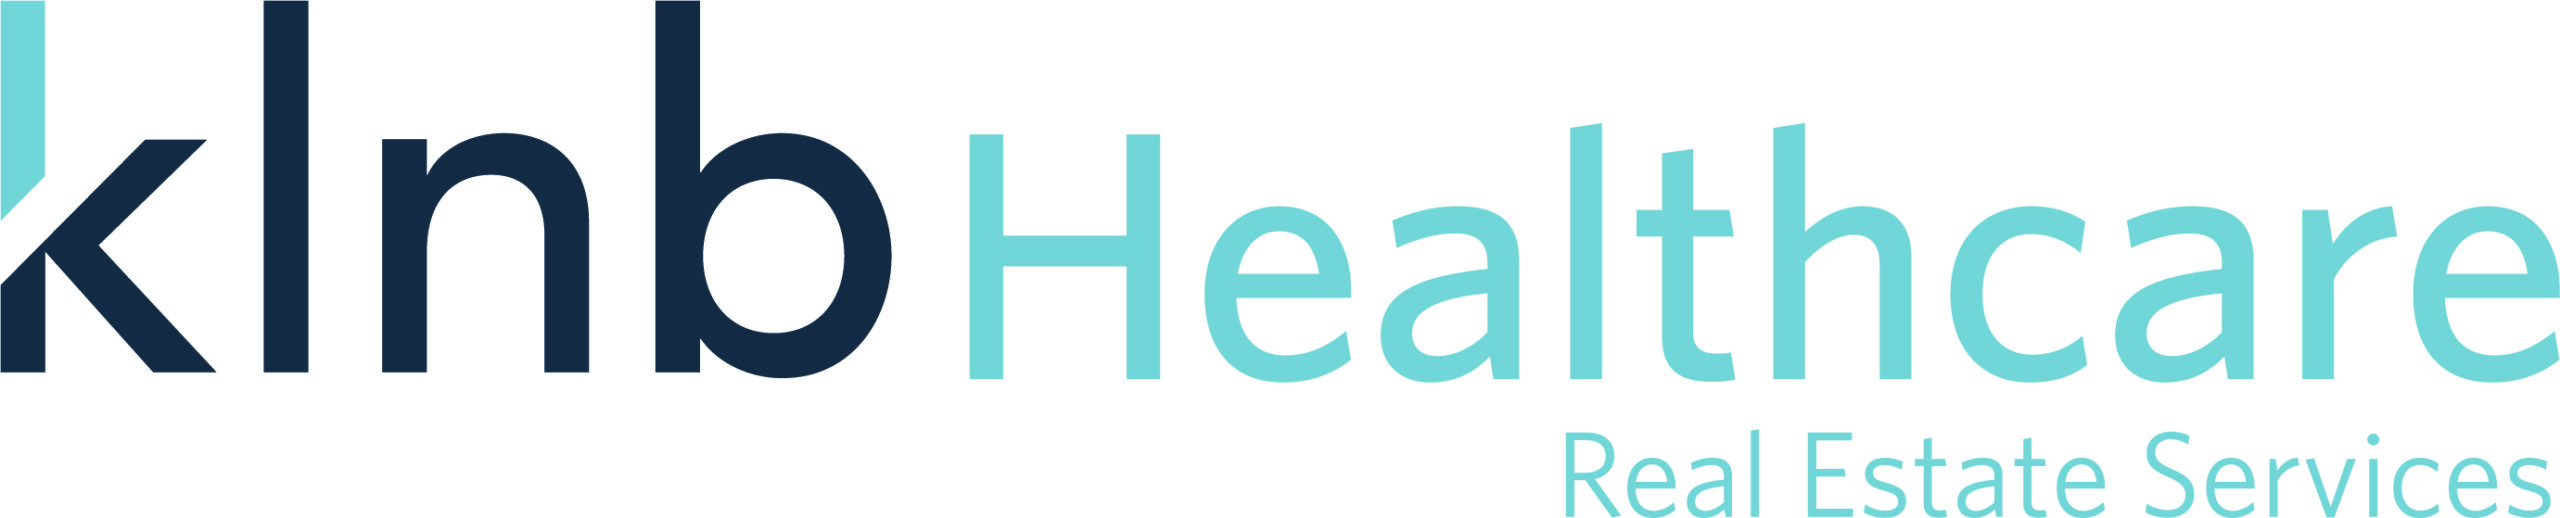 klnb_Healthcare logo